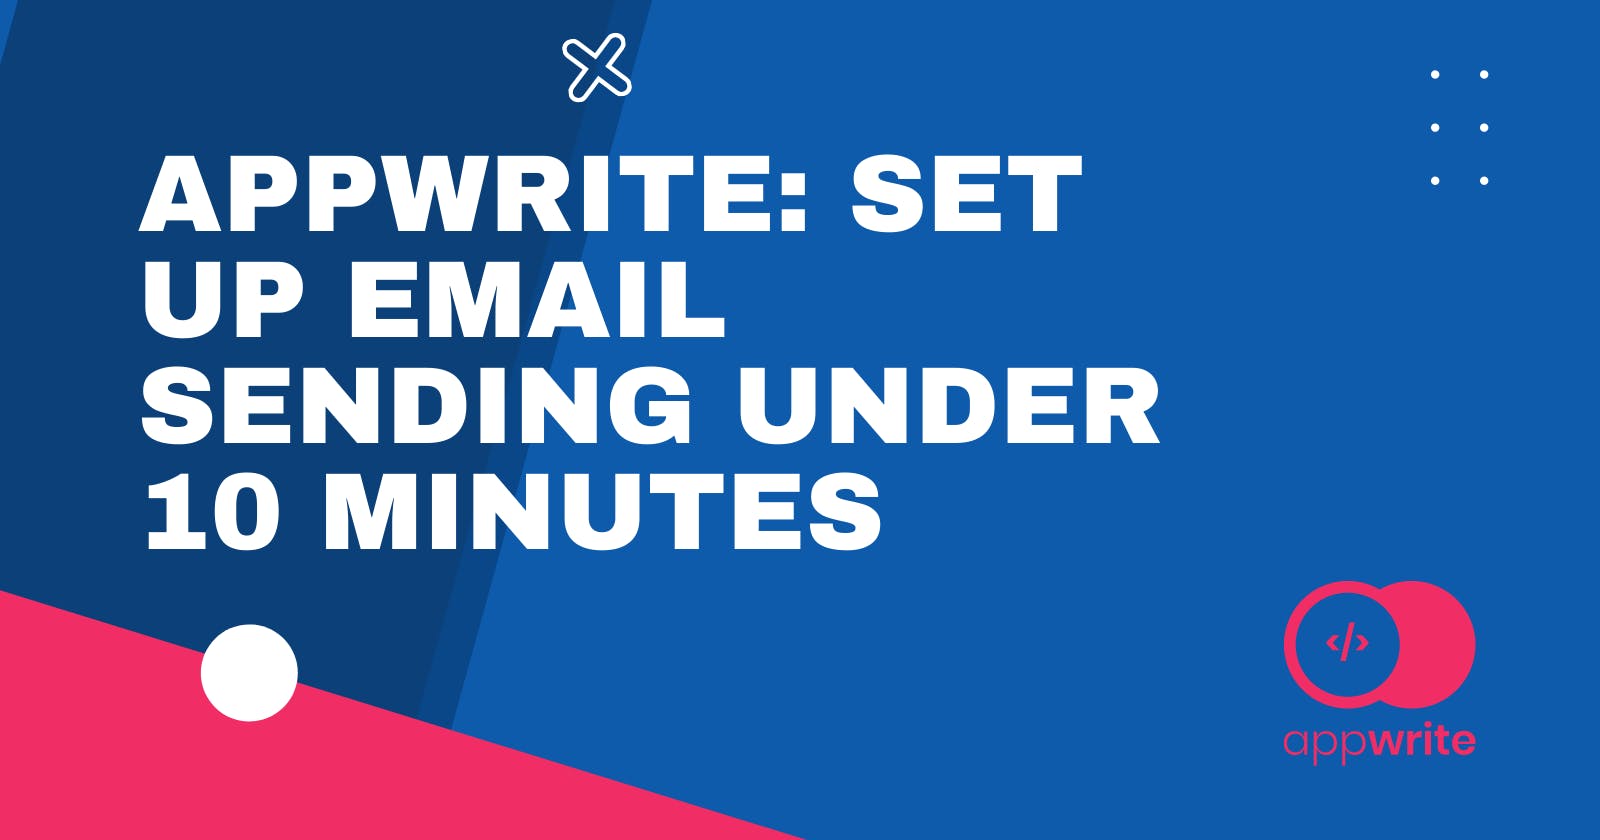 Appwrite: set up email sending under 10 minutes